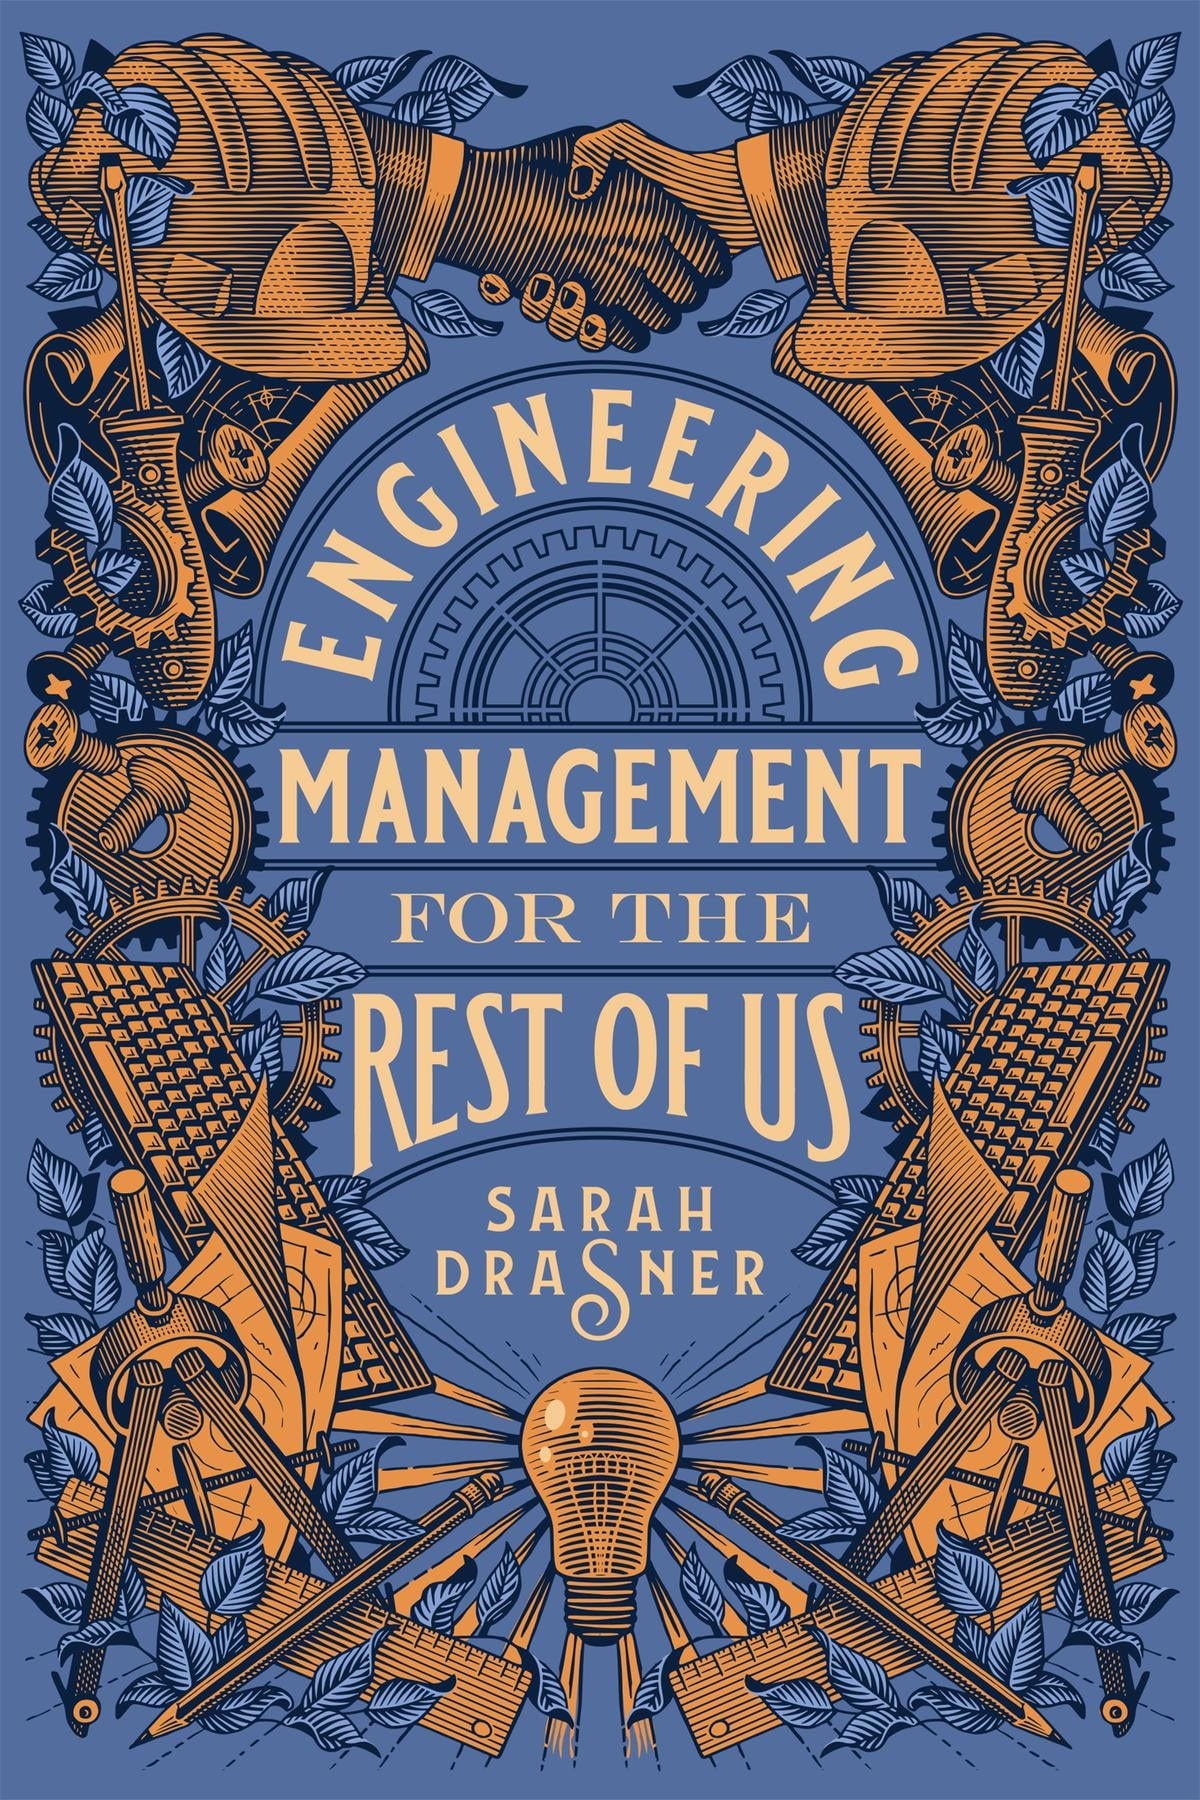 Engineering Management for the Rest of Us eBook de Sarah Drasner - EPUB |  Rakuten Kobo Portugal